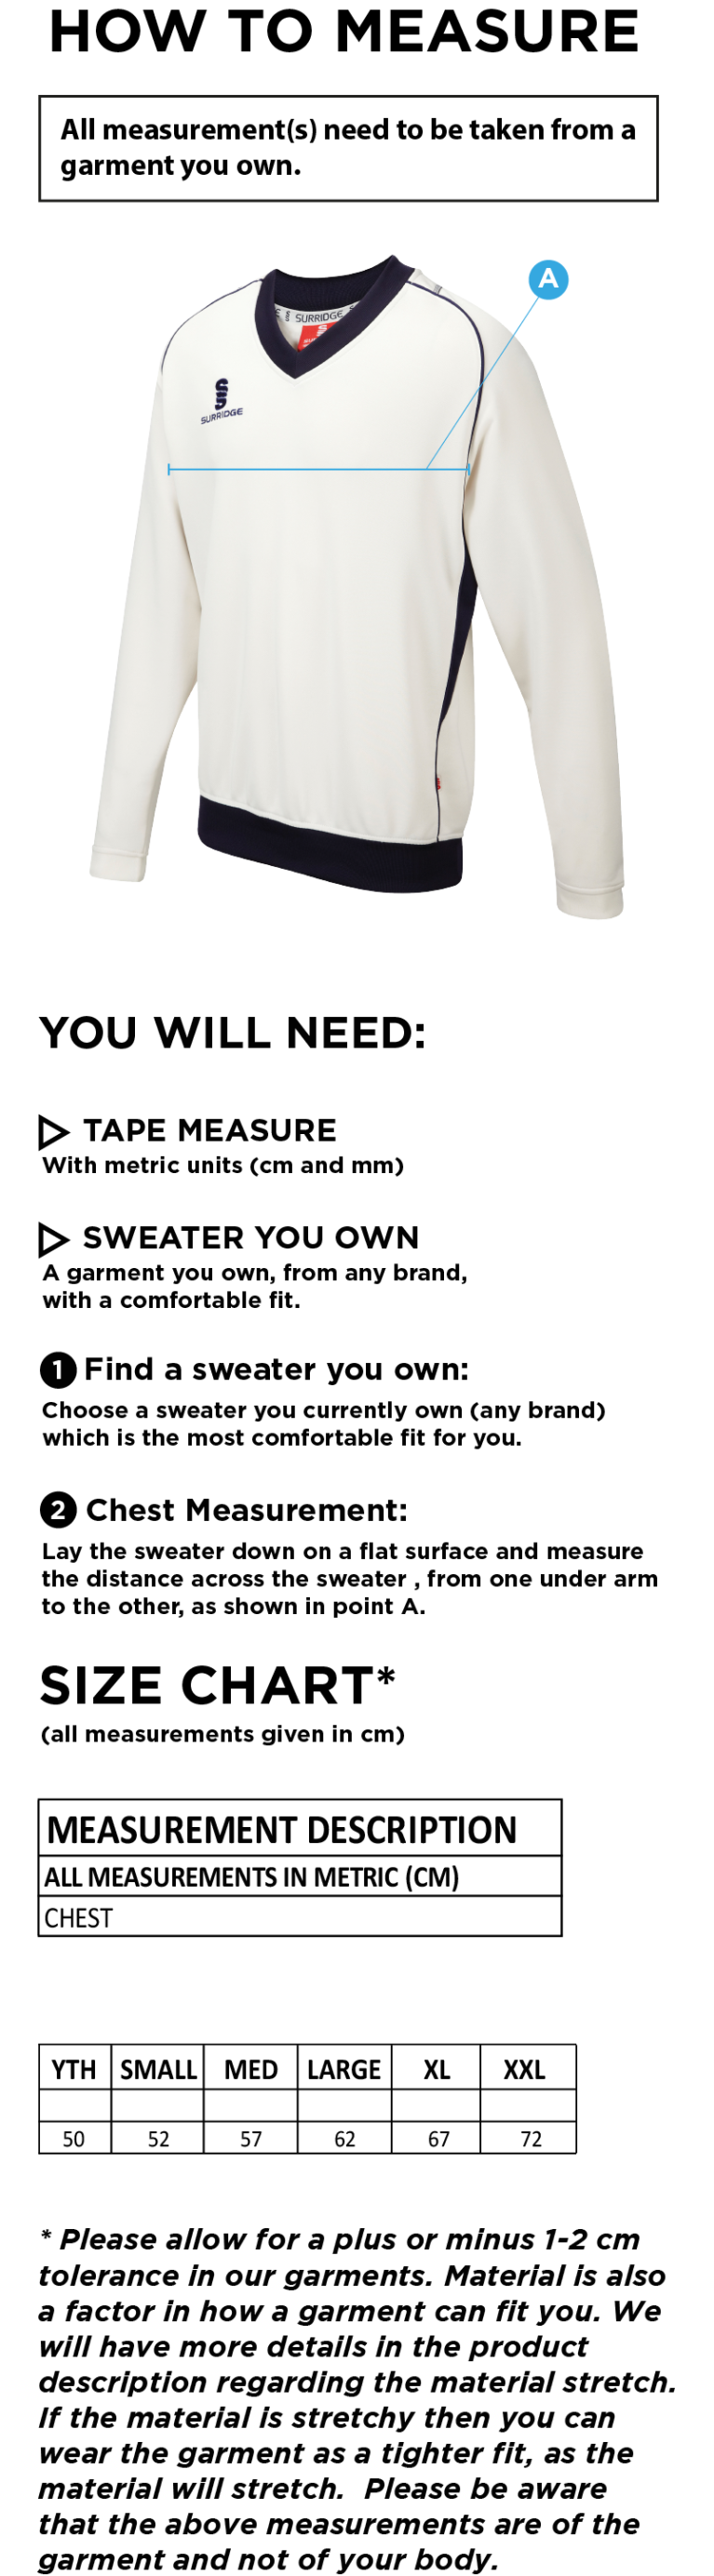 Shepley CC - Long Sleeve Sweater Maroon Trim - Size Guide